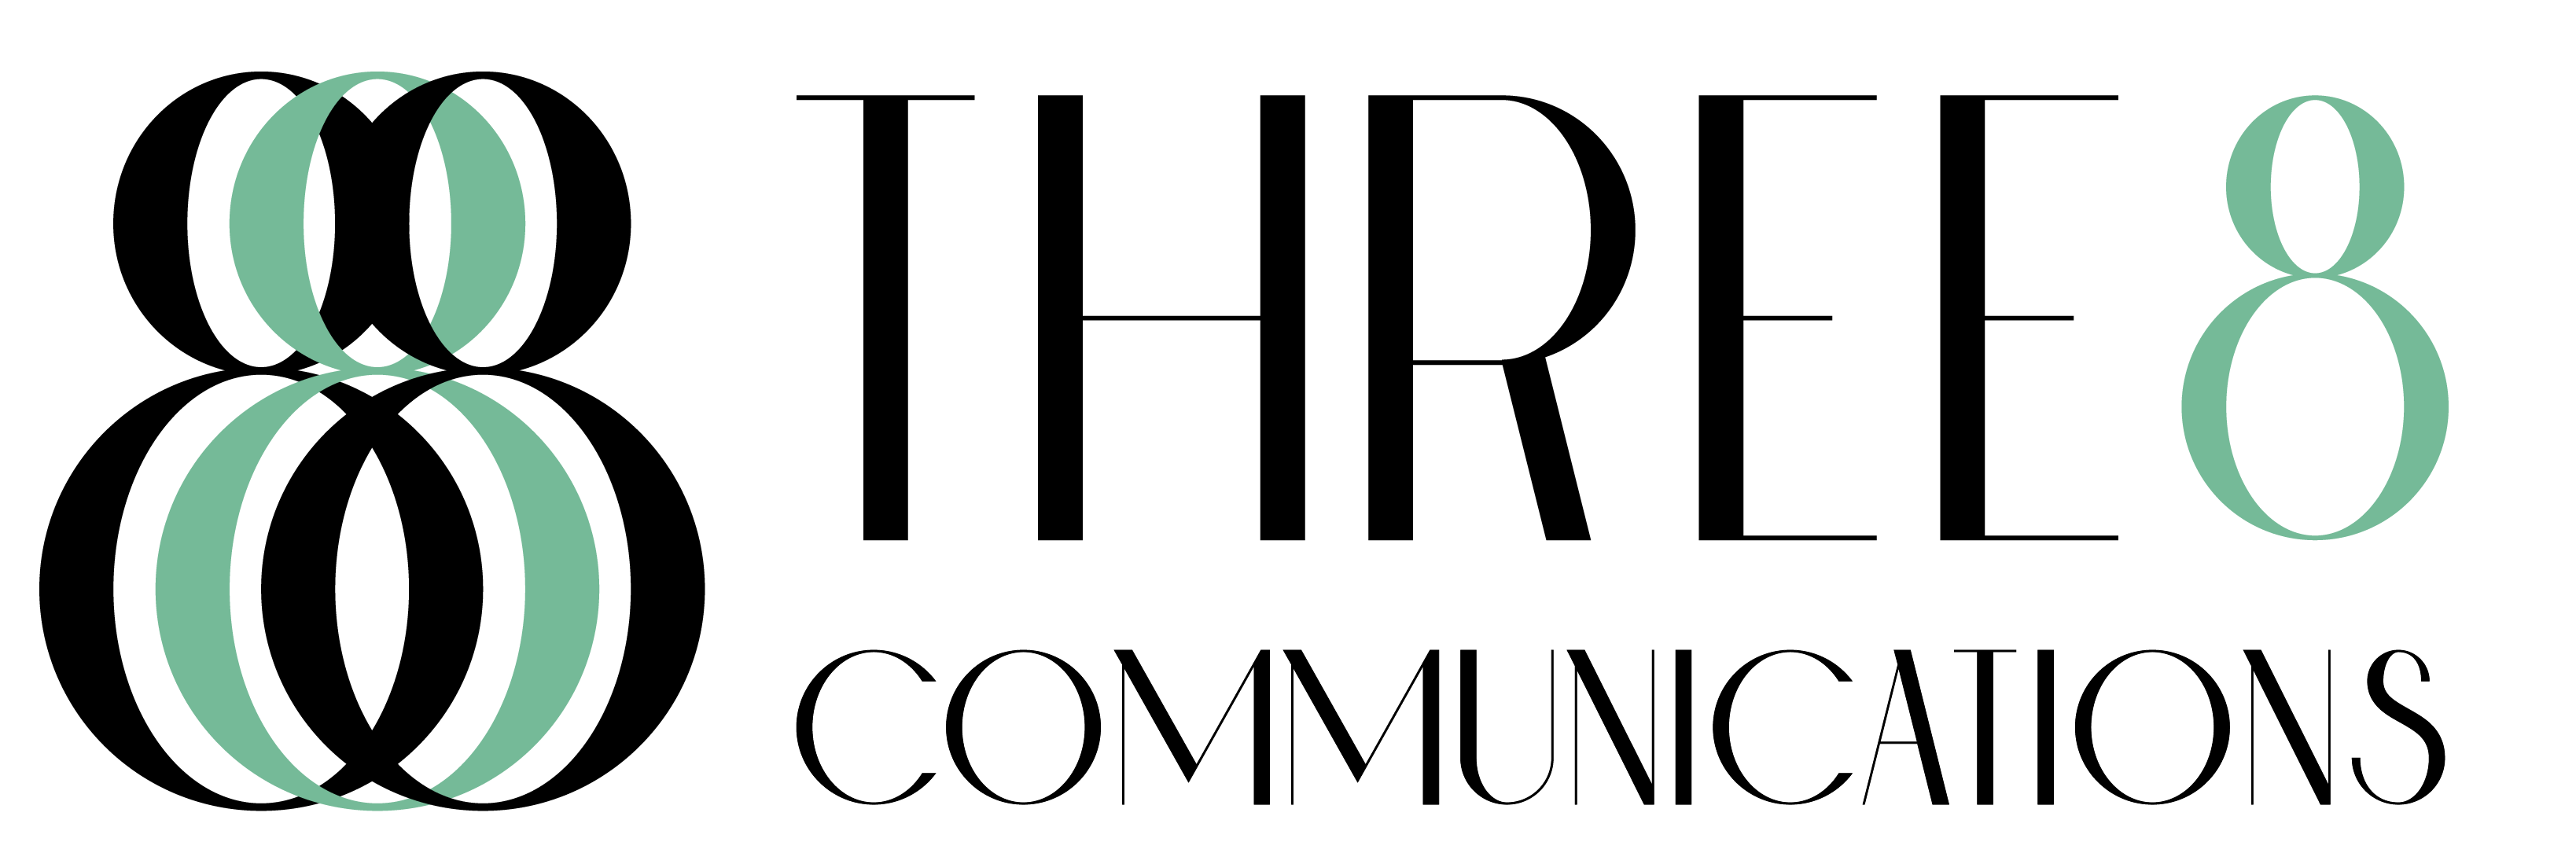 Three8 Communications Logo - Banner image